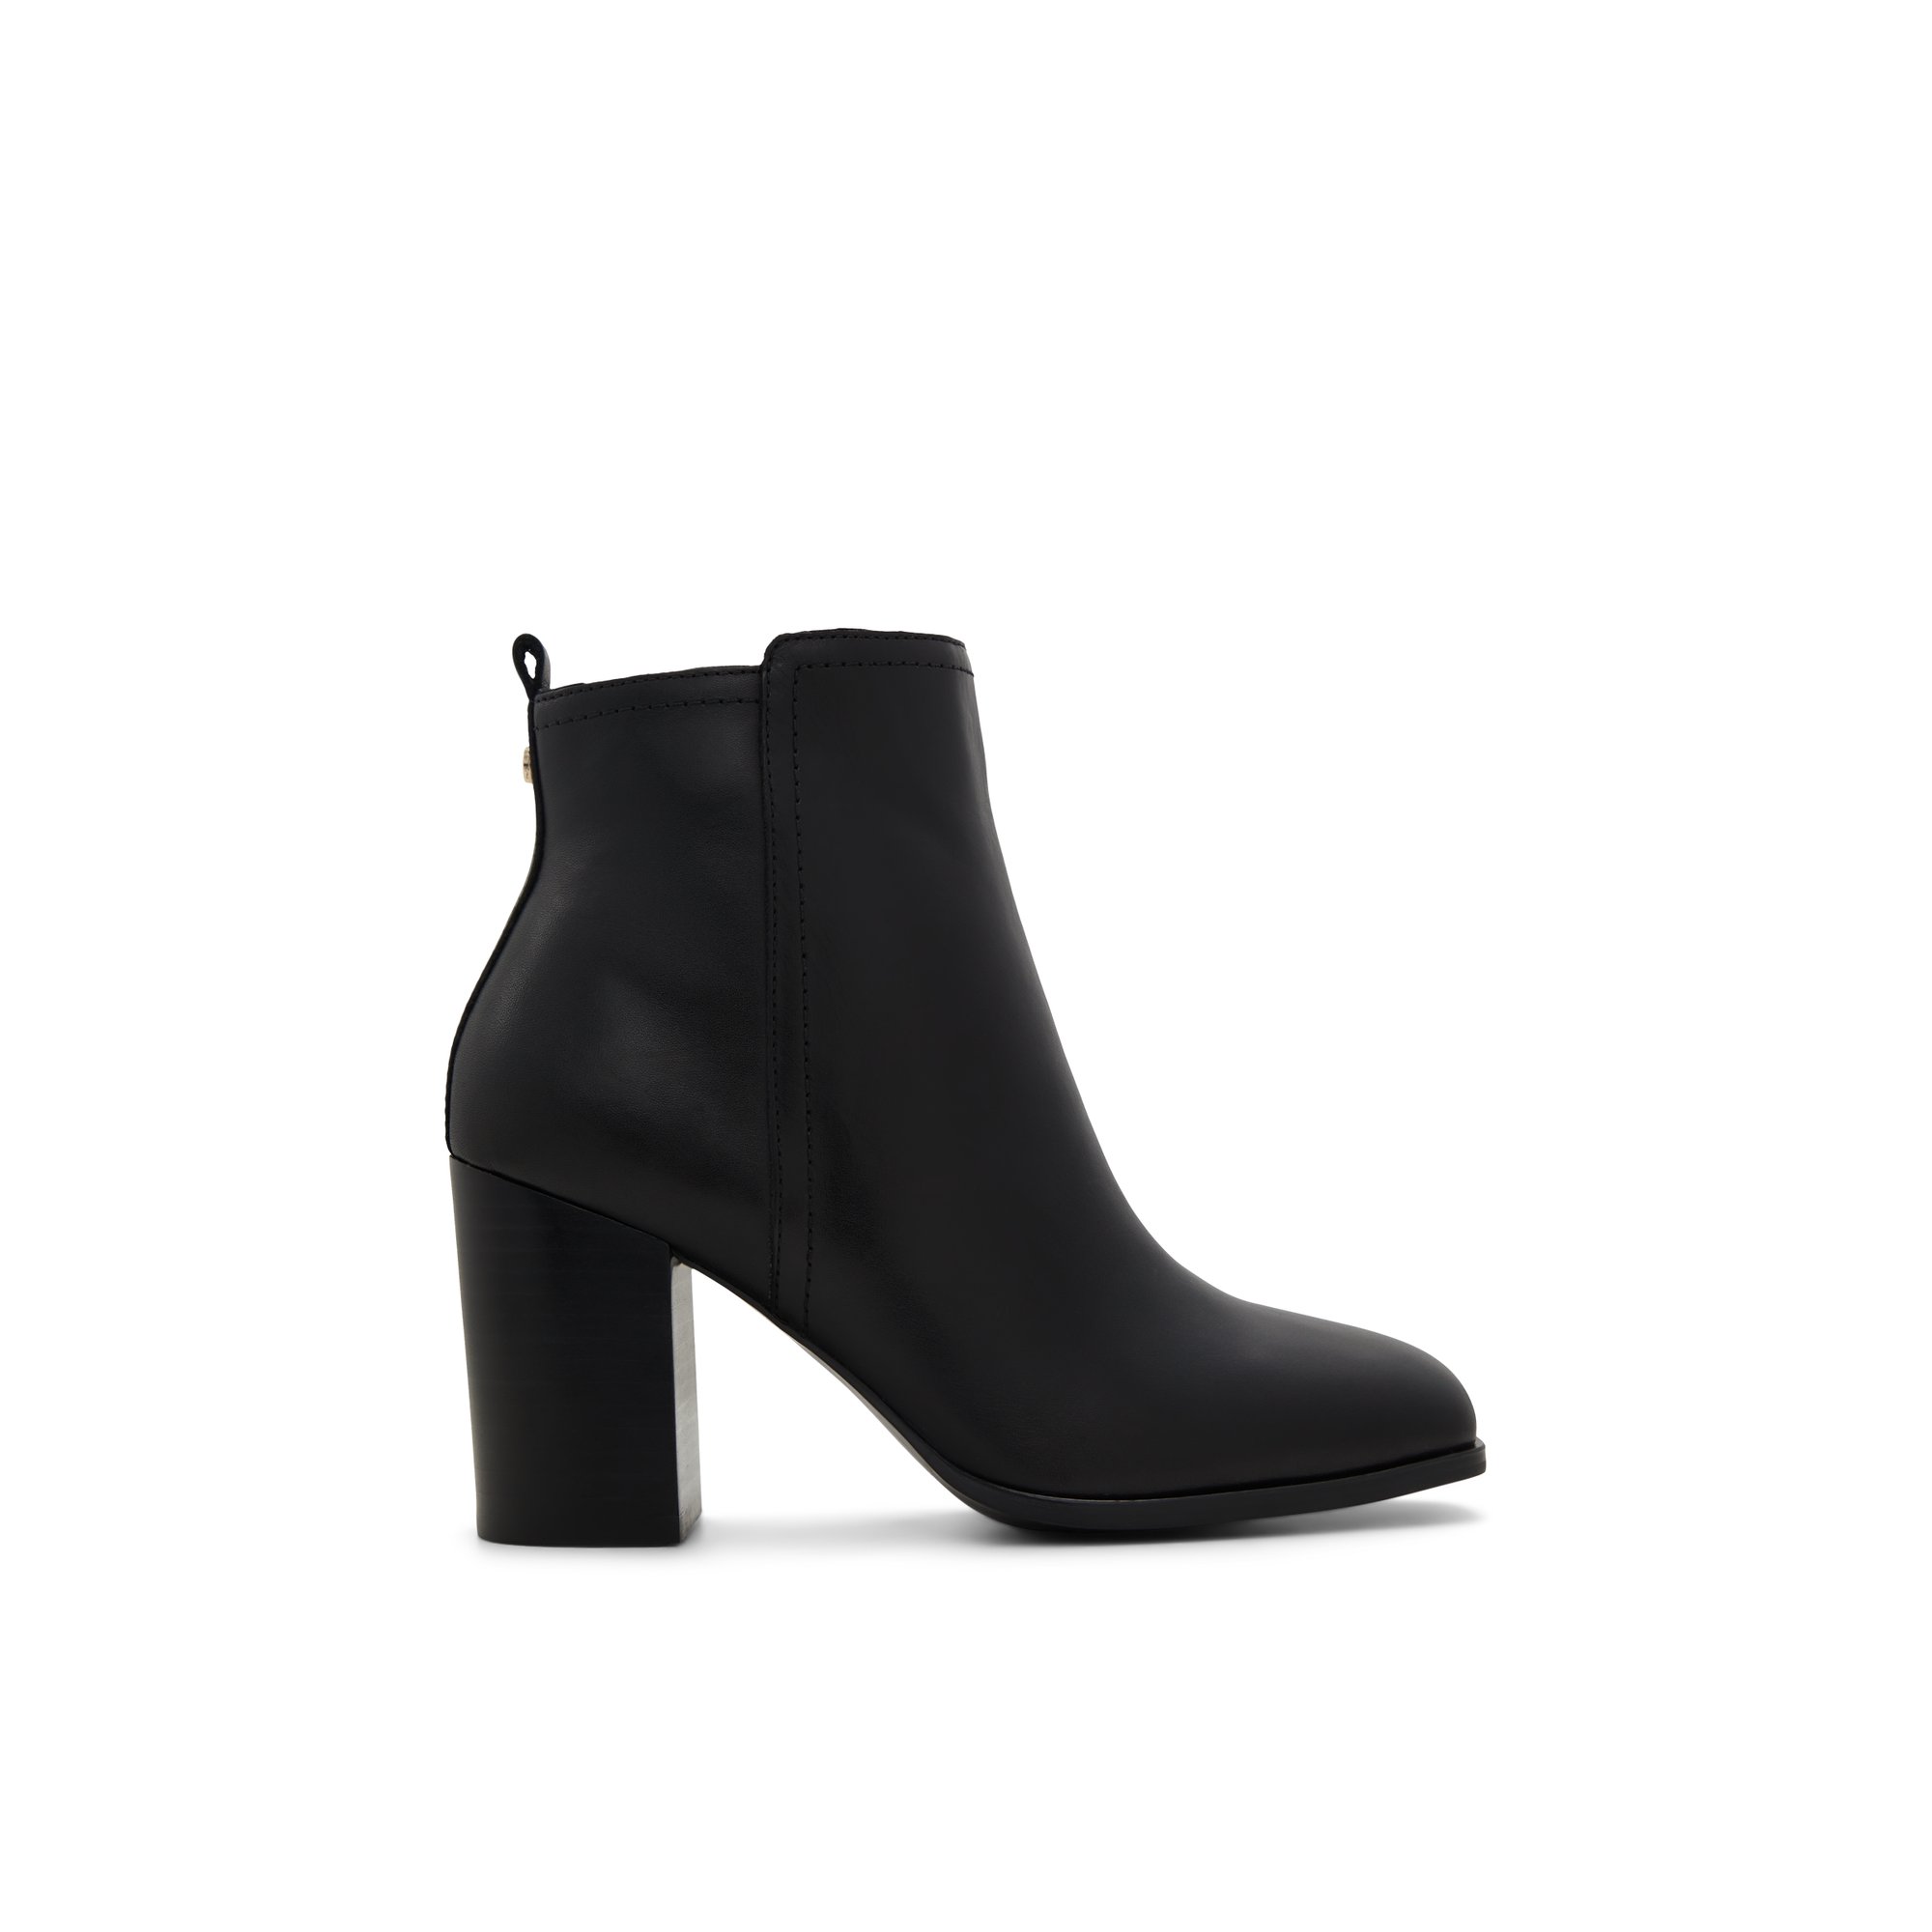 ALDO Reva - Women's Boots Ankle - Black